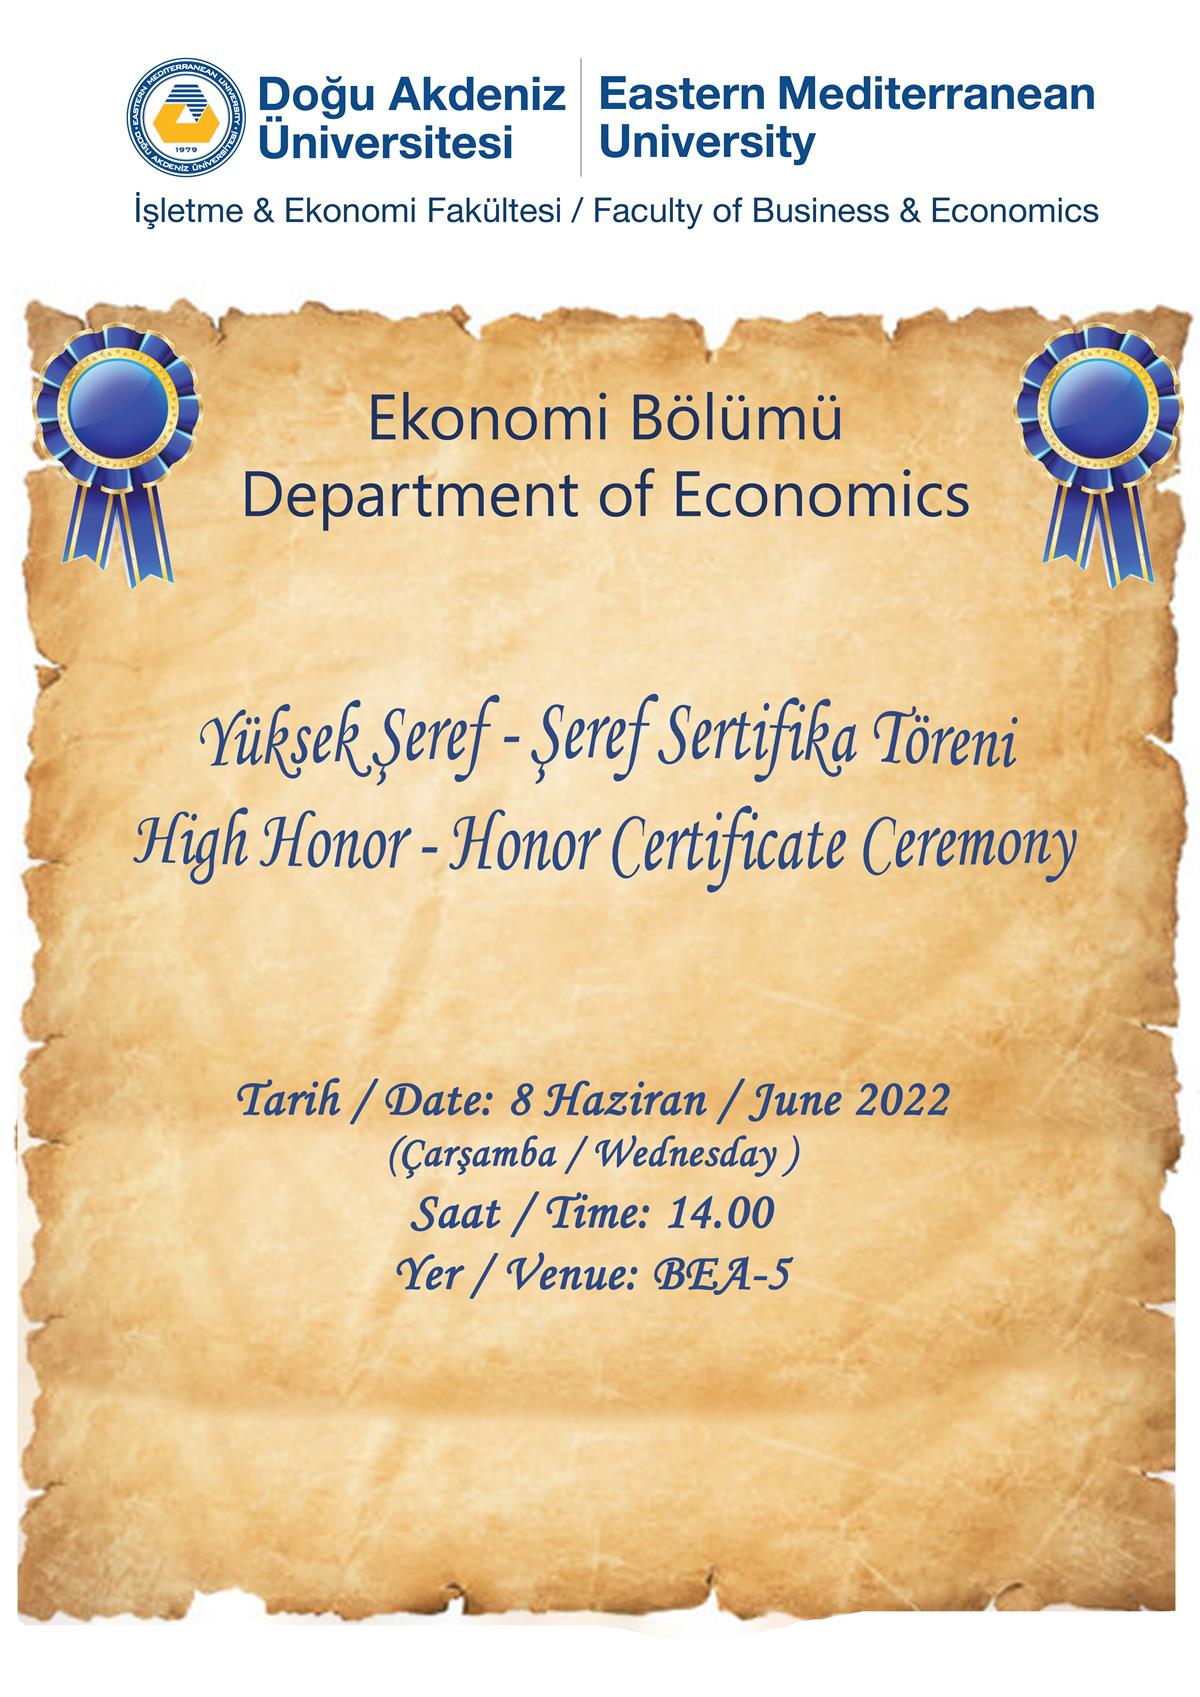 Department of Economics High Honor - Honor Certificate Ceremony